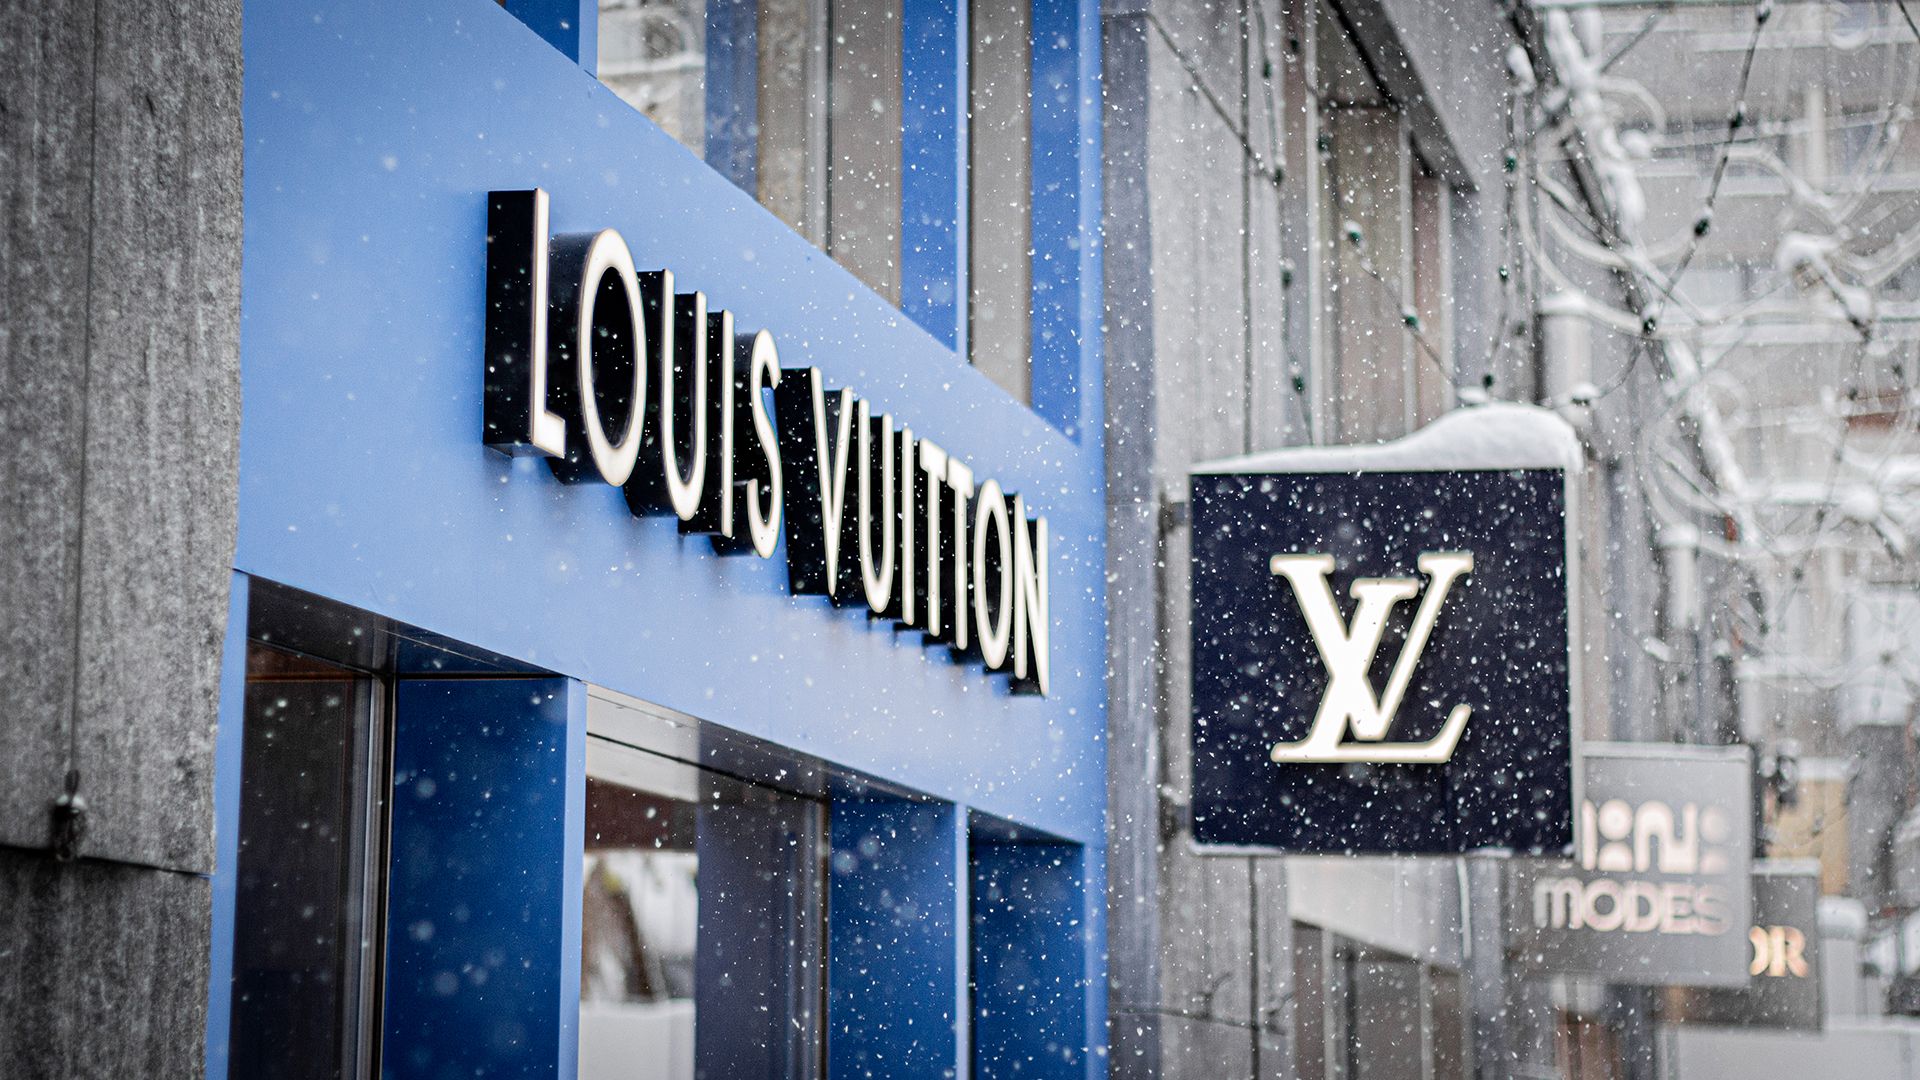 LOUIS VUITTON ST MORITZ store, Switzerland